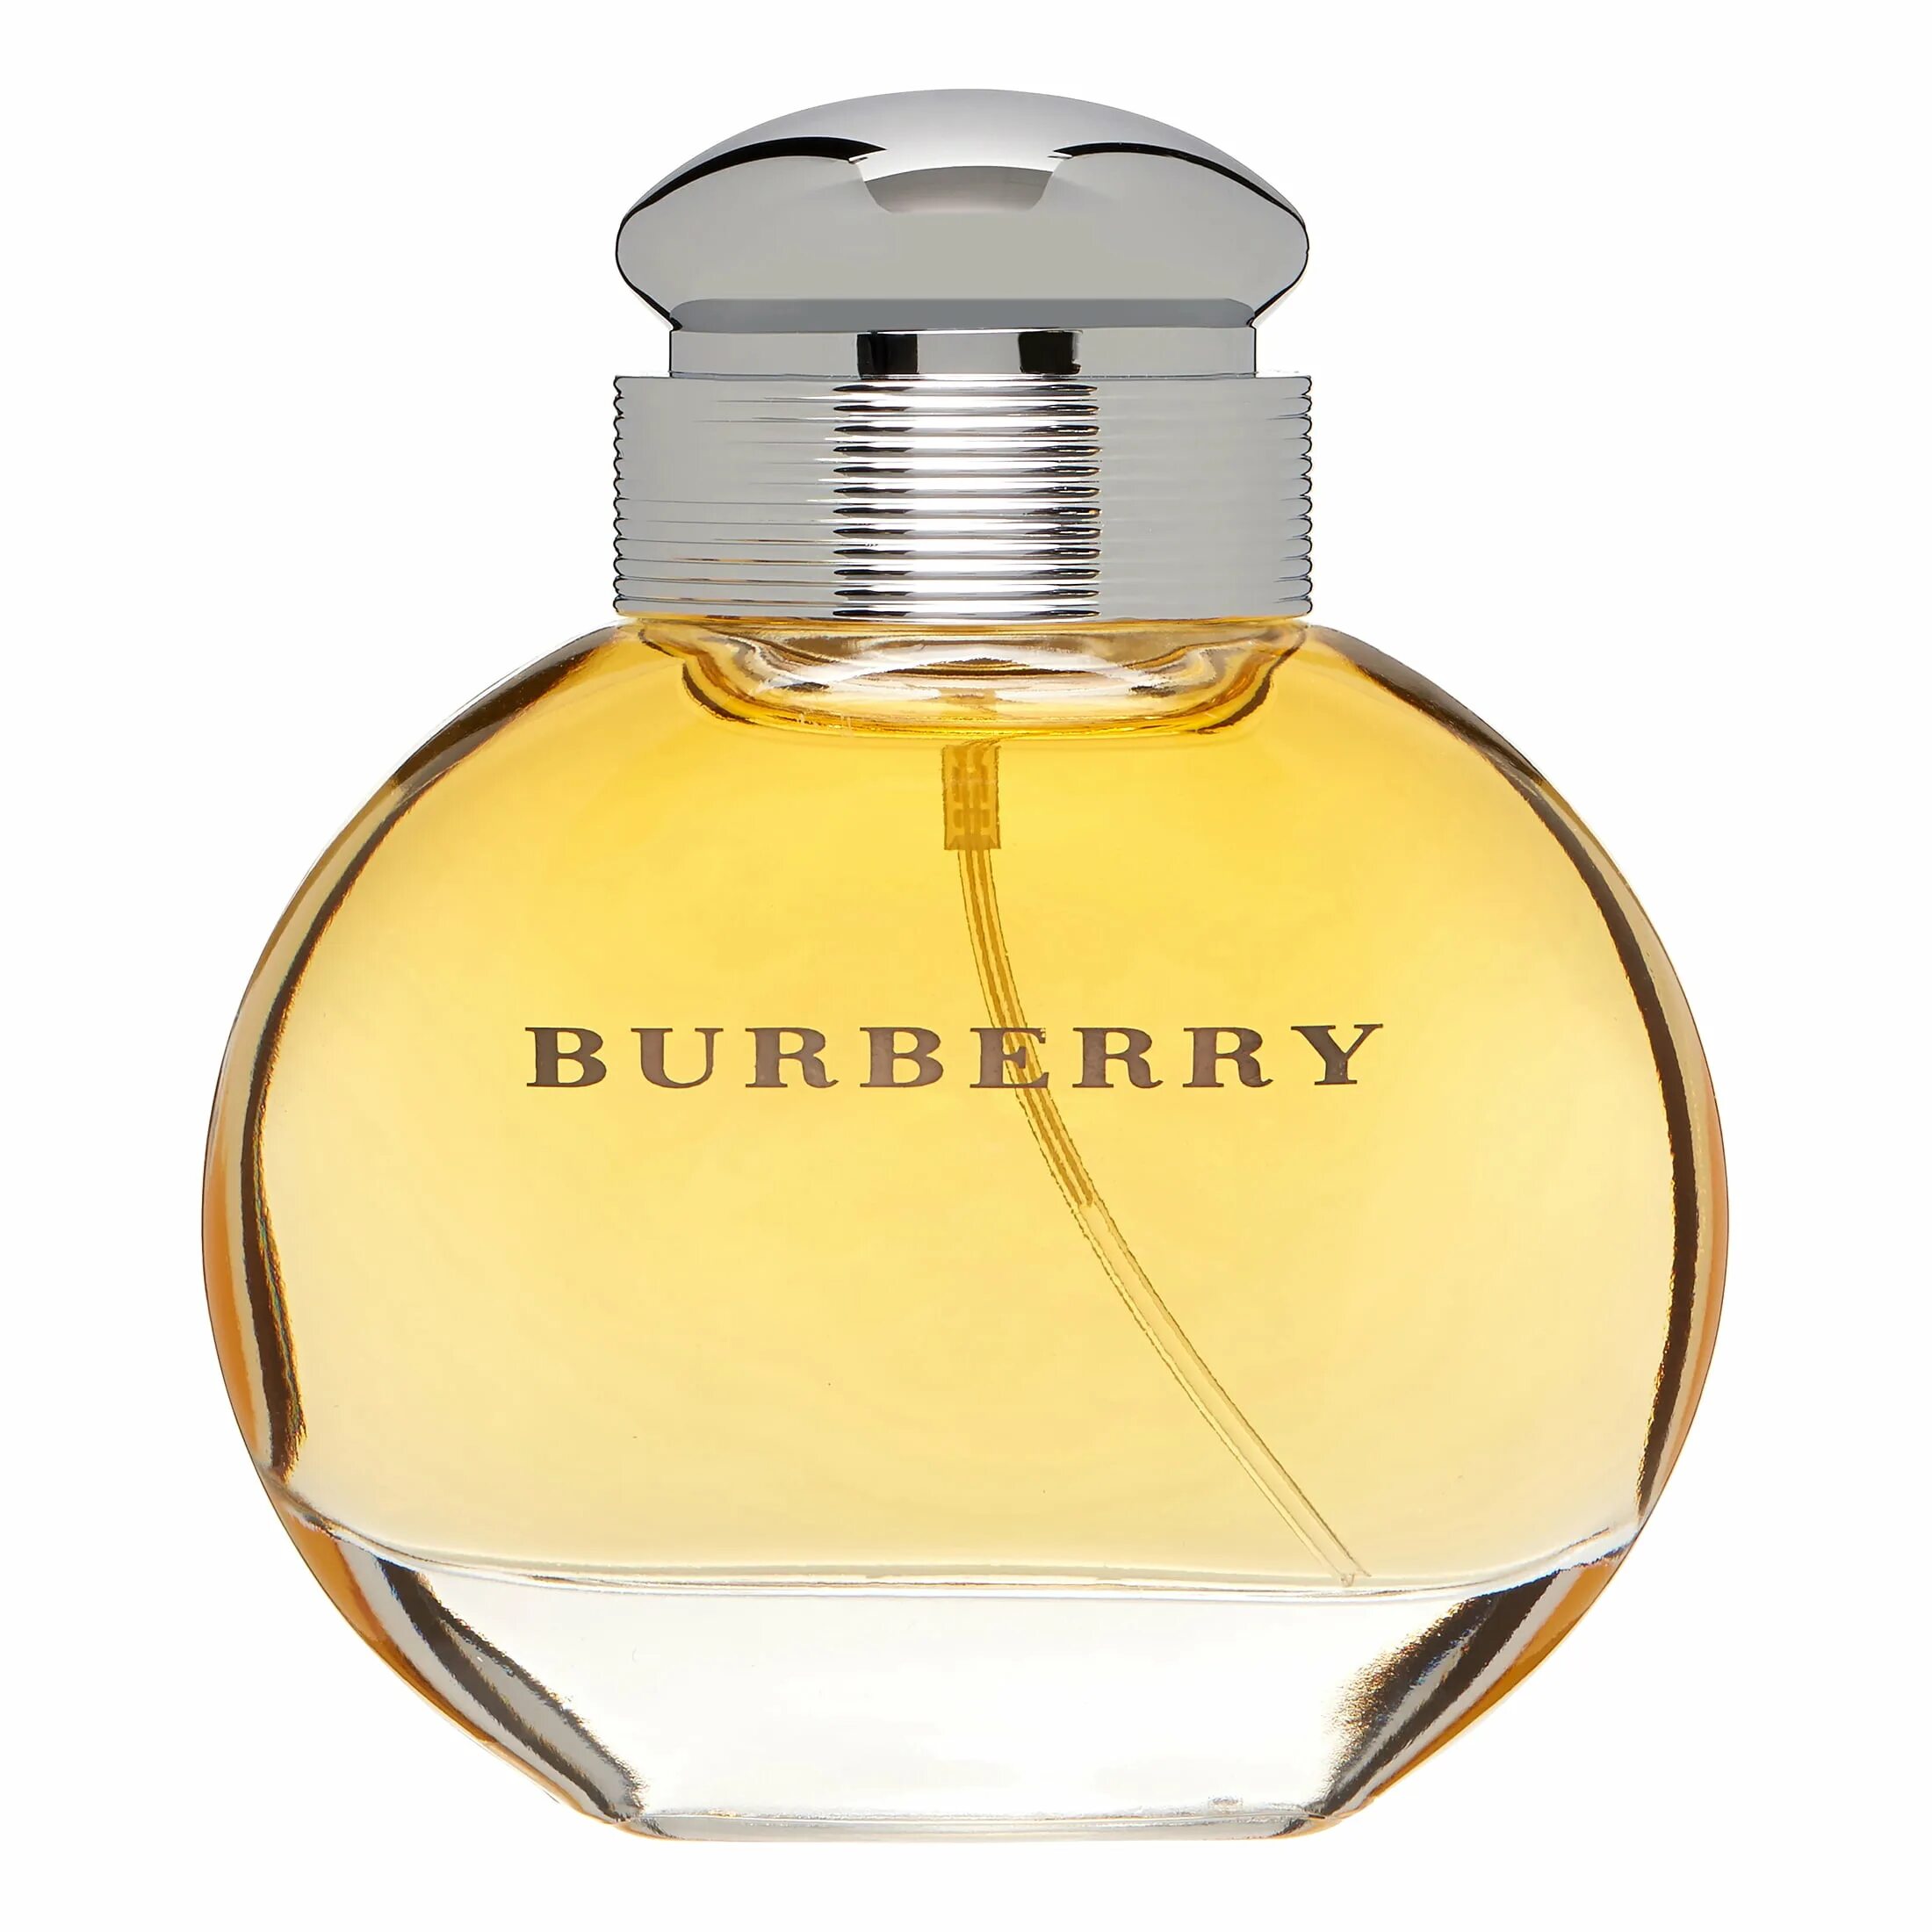 Burberry classic. Burberry for women EDP 100ml. Burberry EDP. Burberry Classic for women. Барбери Классик духи женские.